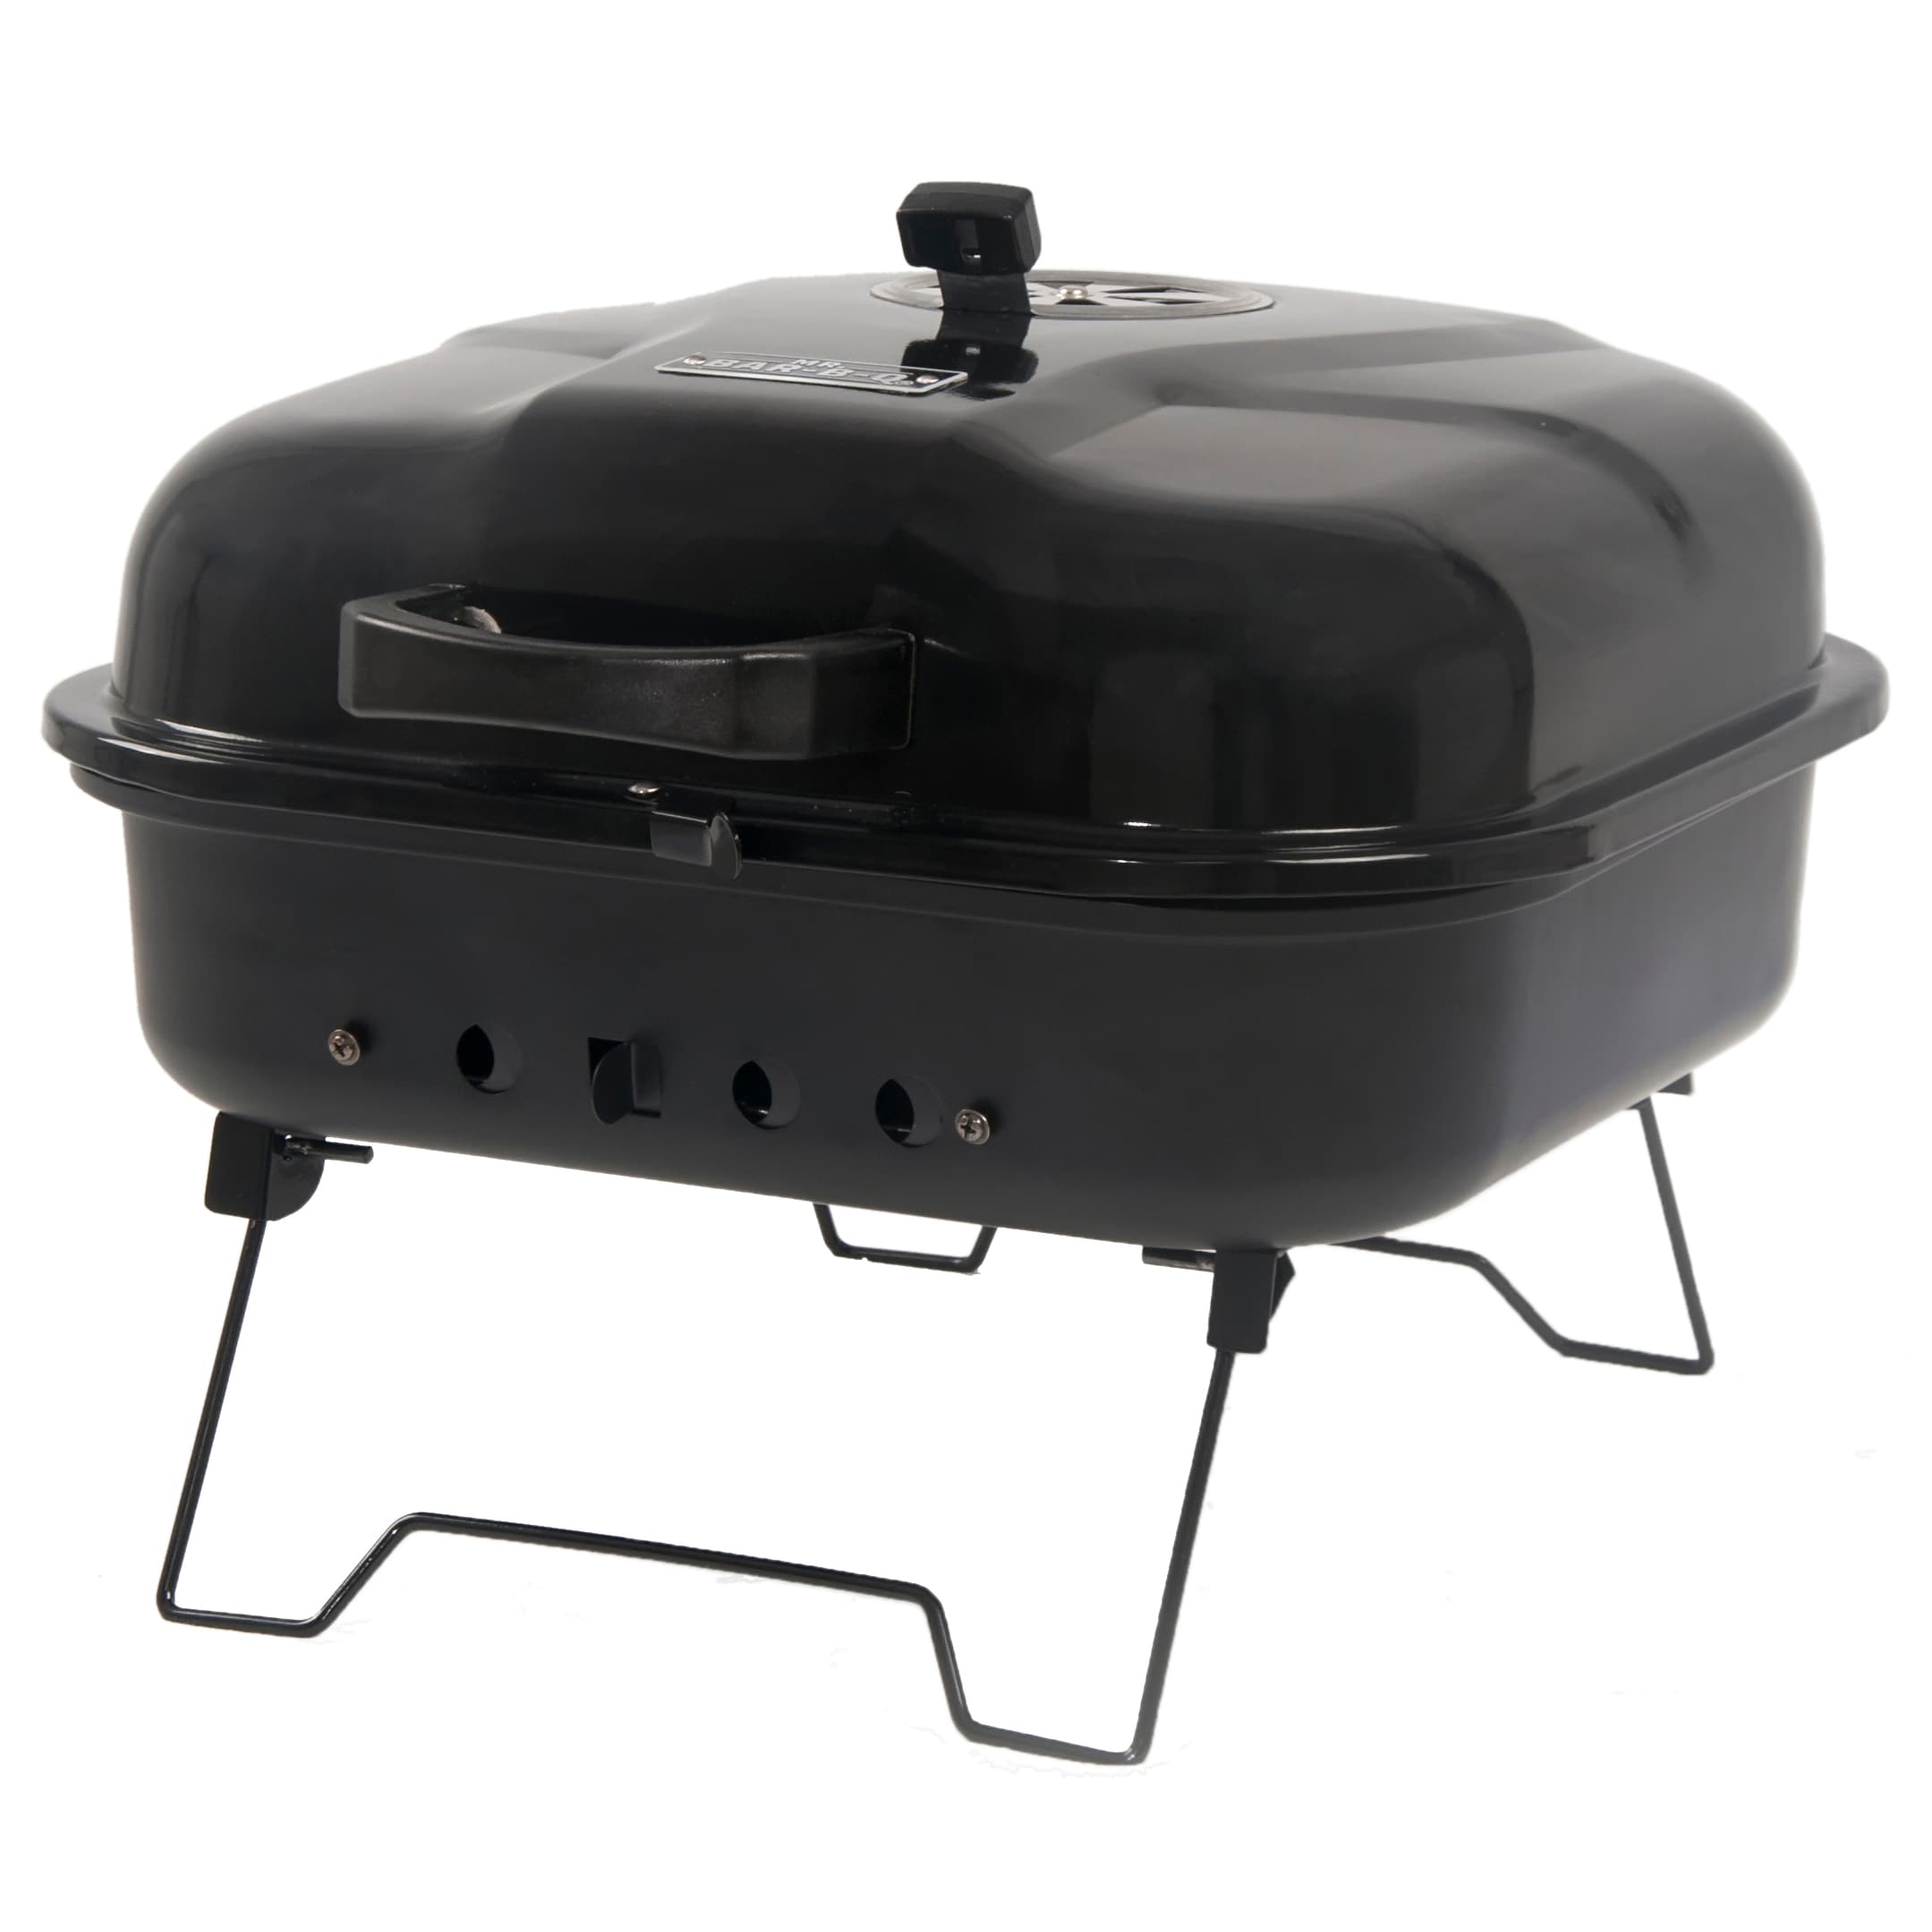 Mr. Bar-B-Q Portable charcoal grill 206-Sq in Black/Porcelain Charcoal Grill in the Portable Grills at Lowes.com